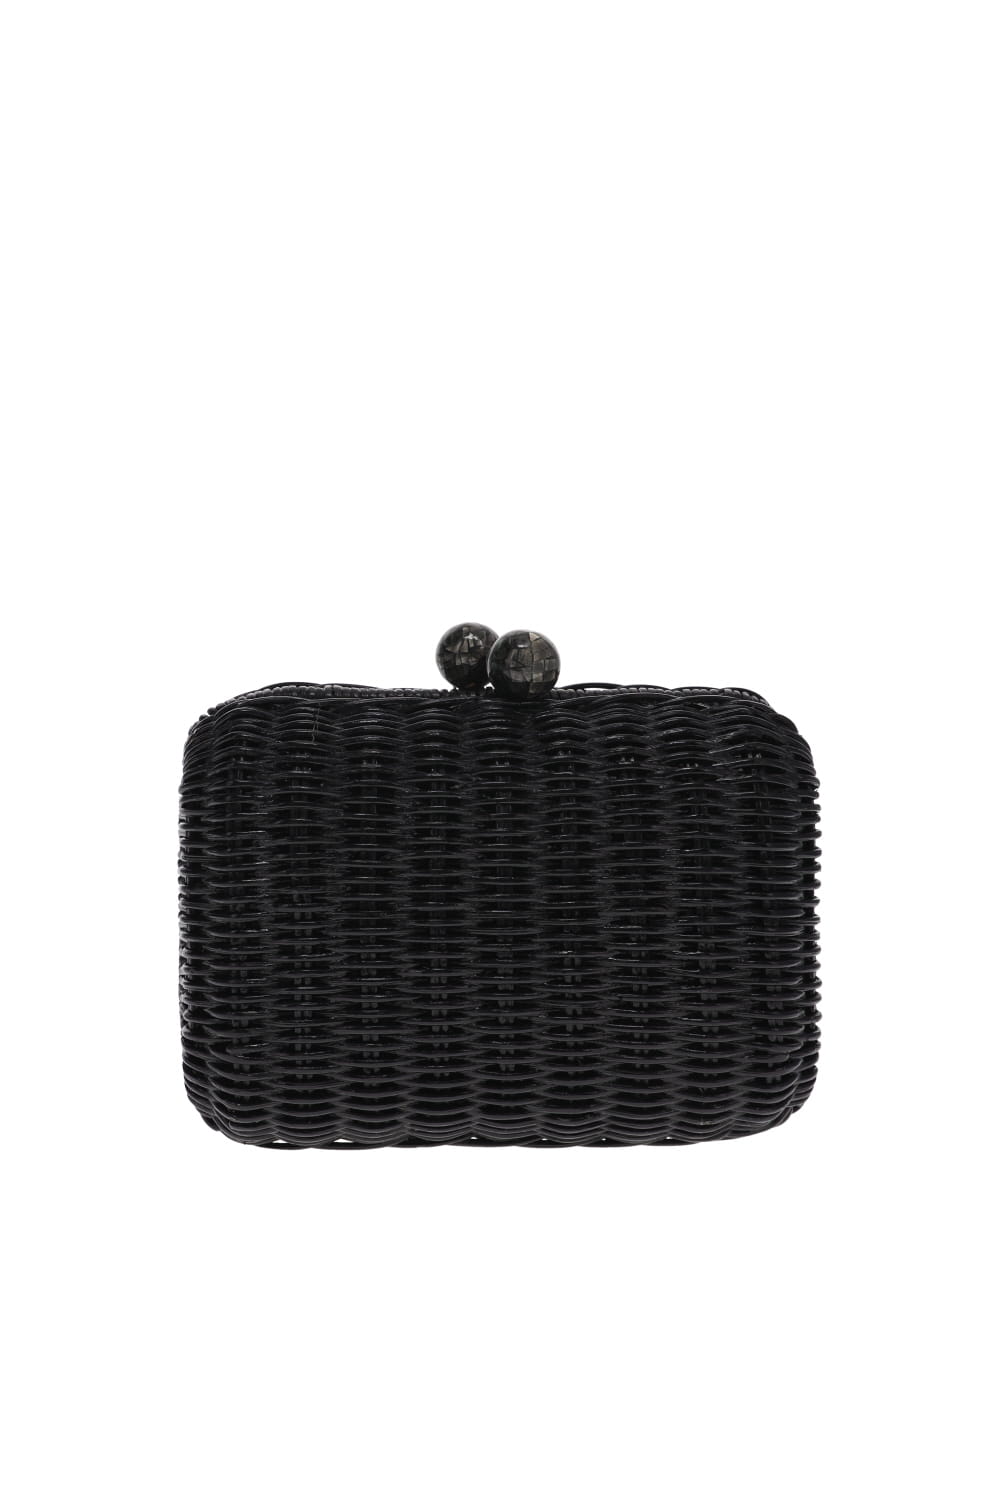 Top Brand Handbag Small Size Design Single Handle Clutch Bag for Woman  Crossbody | eBay